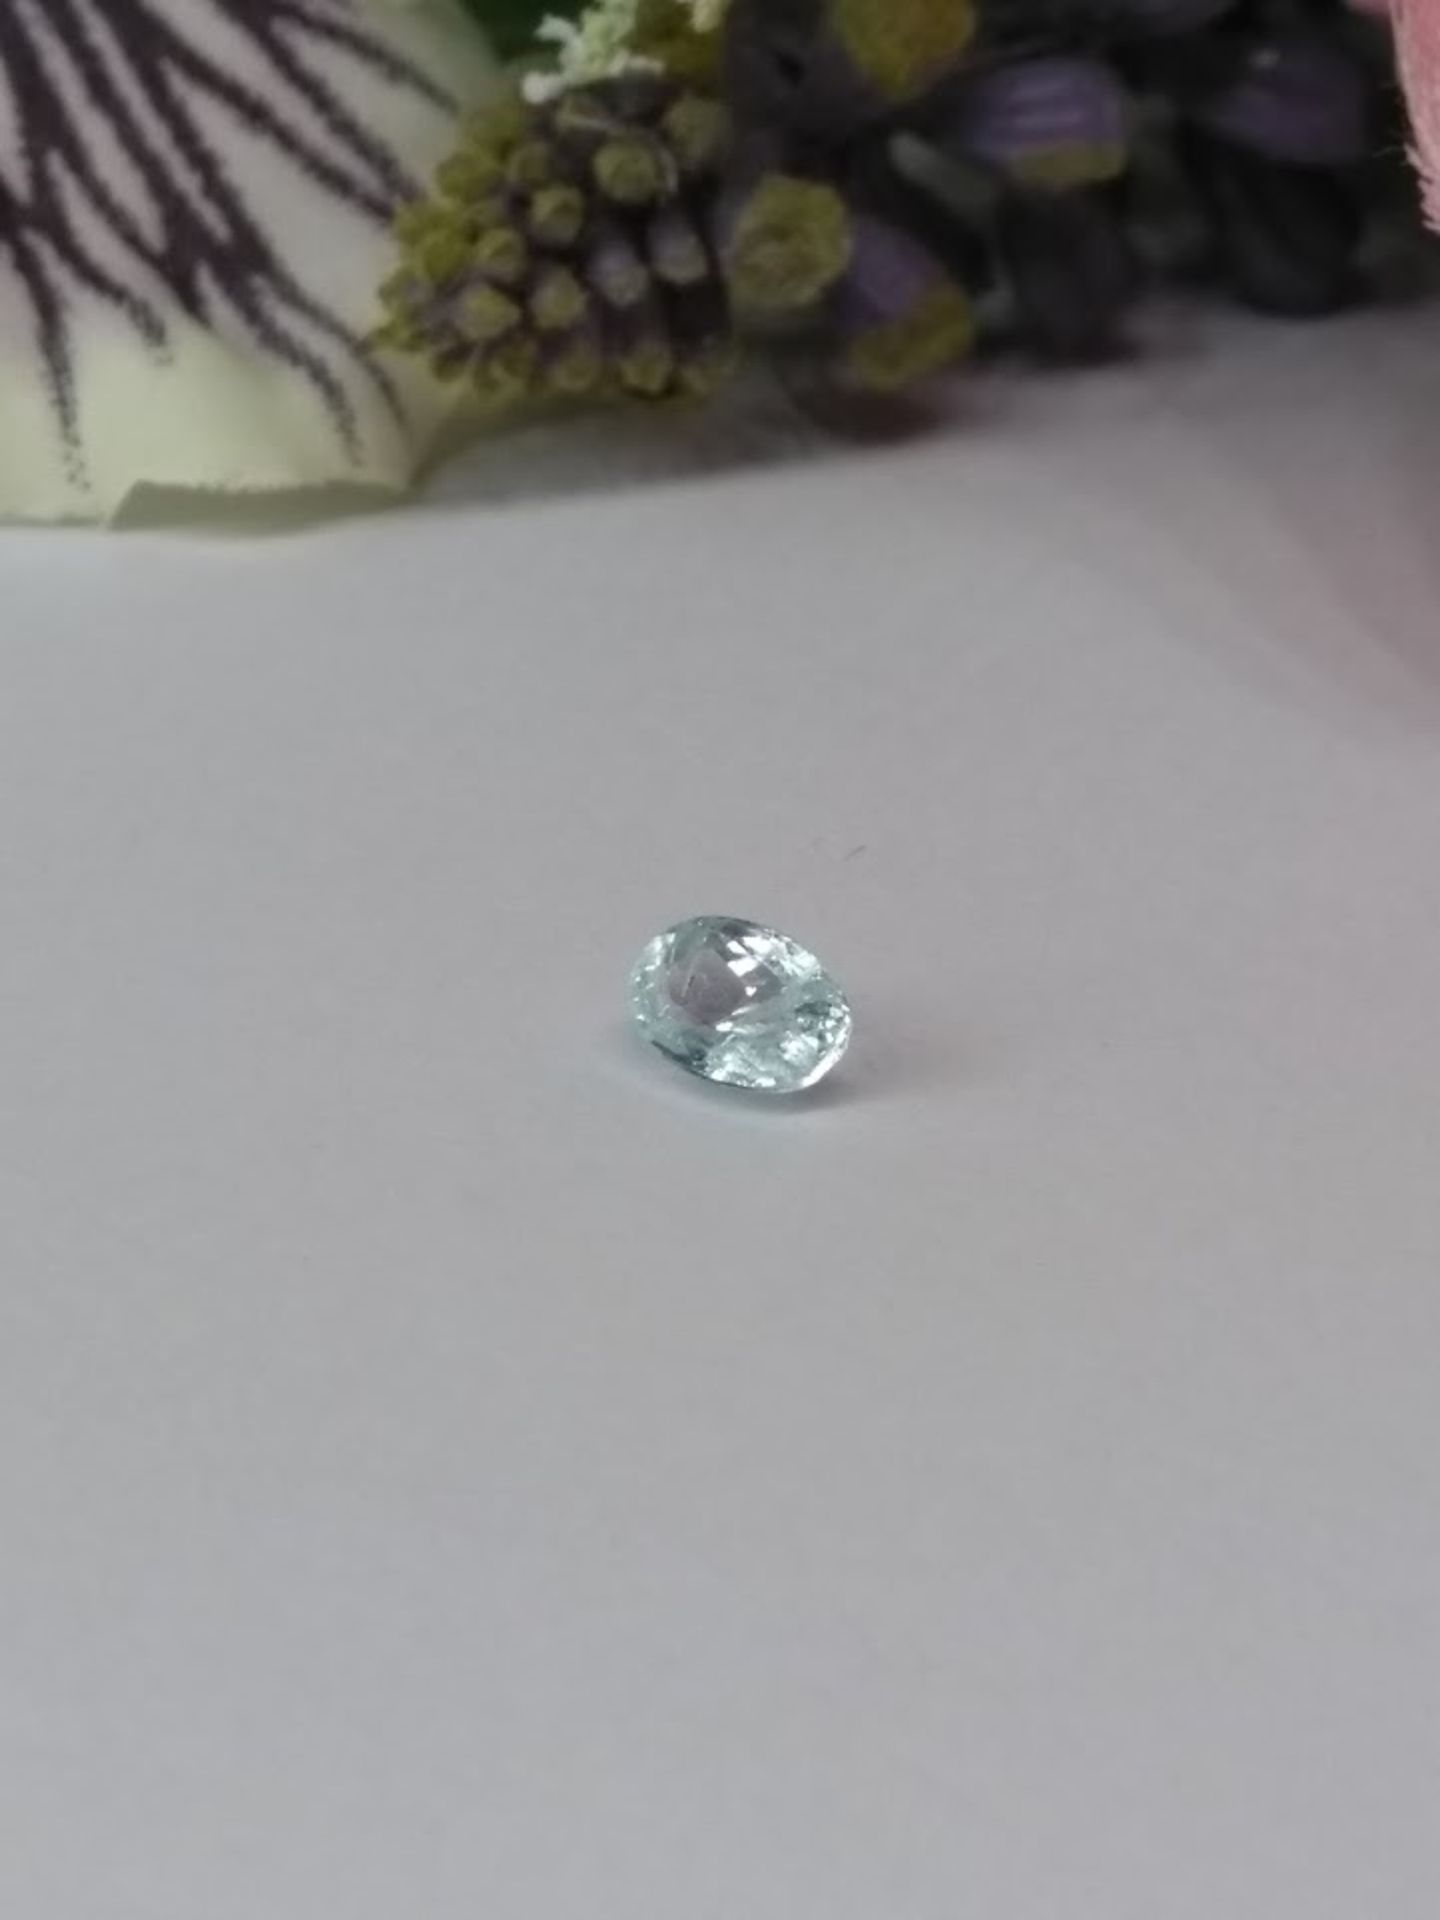 A magnificent 0.46 Cts Natural Paraiba Tourmaline - A Very rare Gemstone - VVS Clarity. - Image 2 of 3